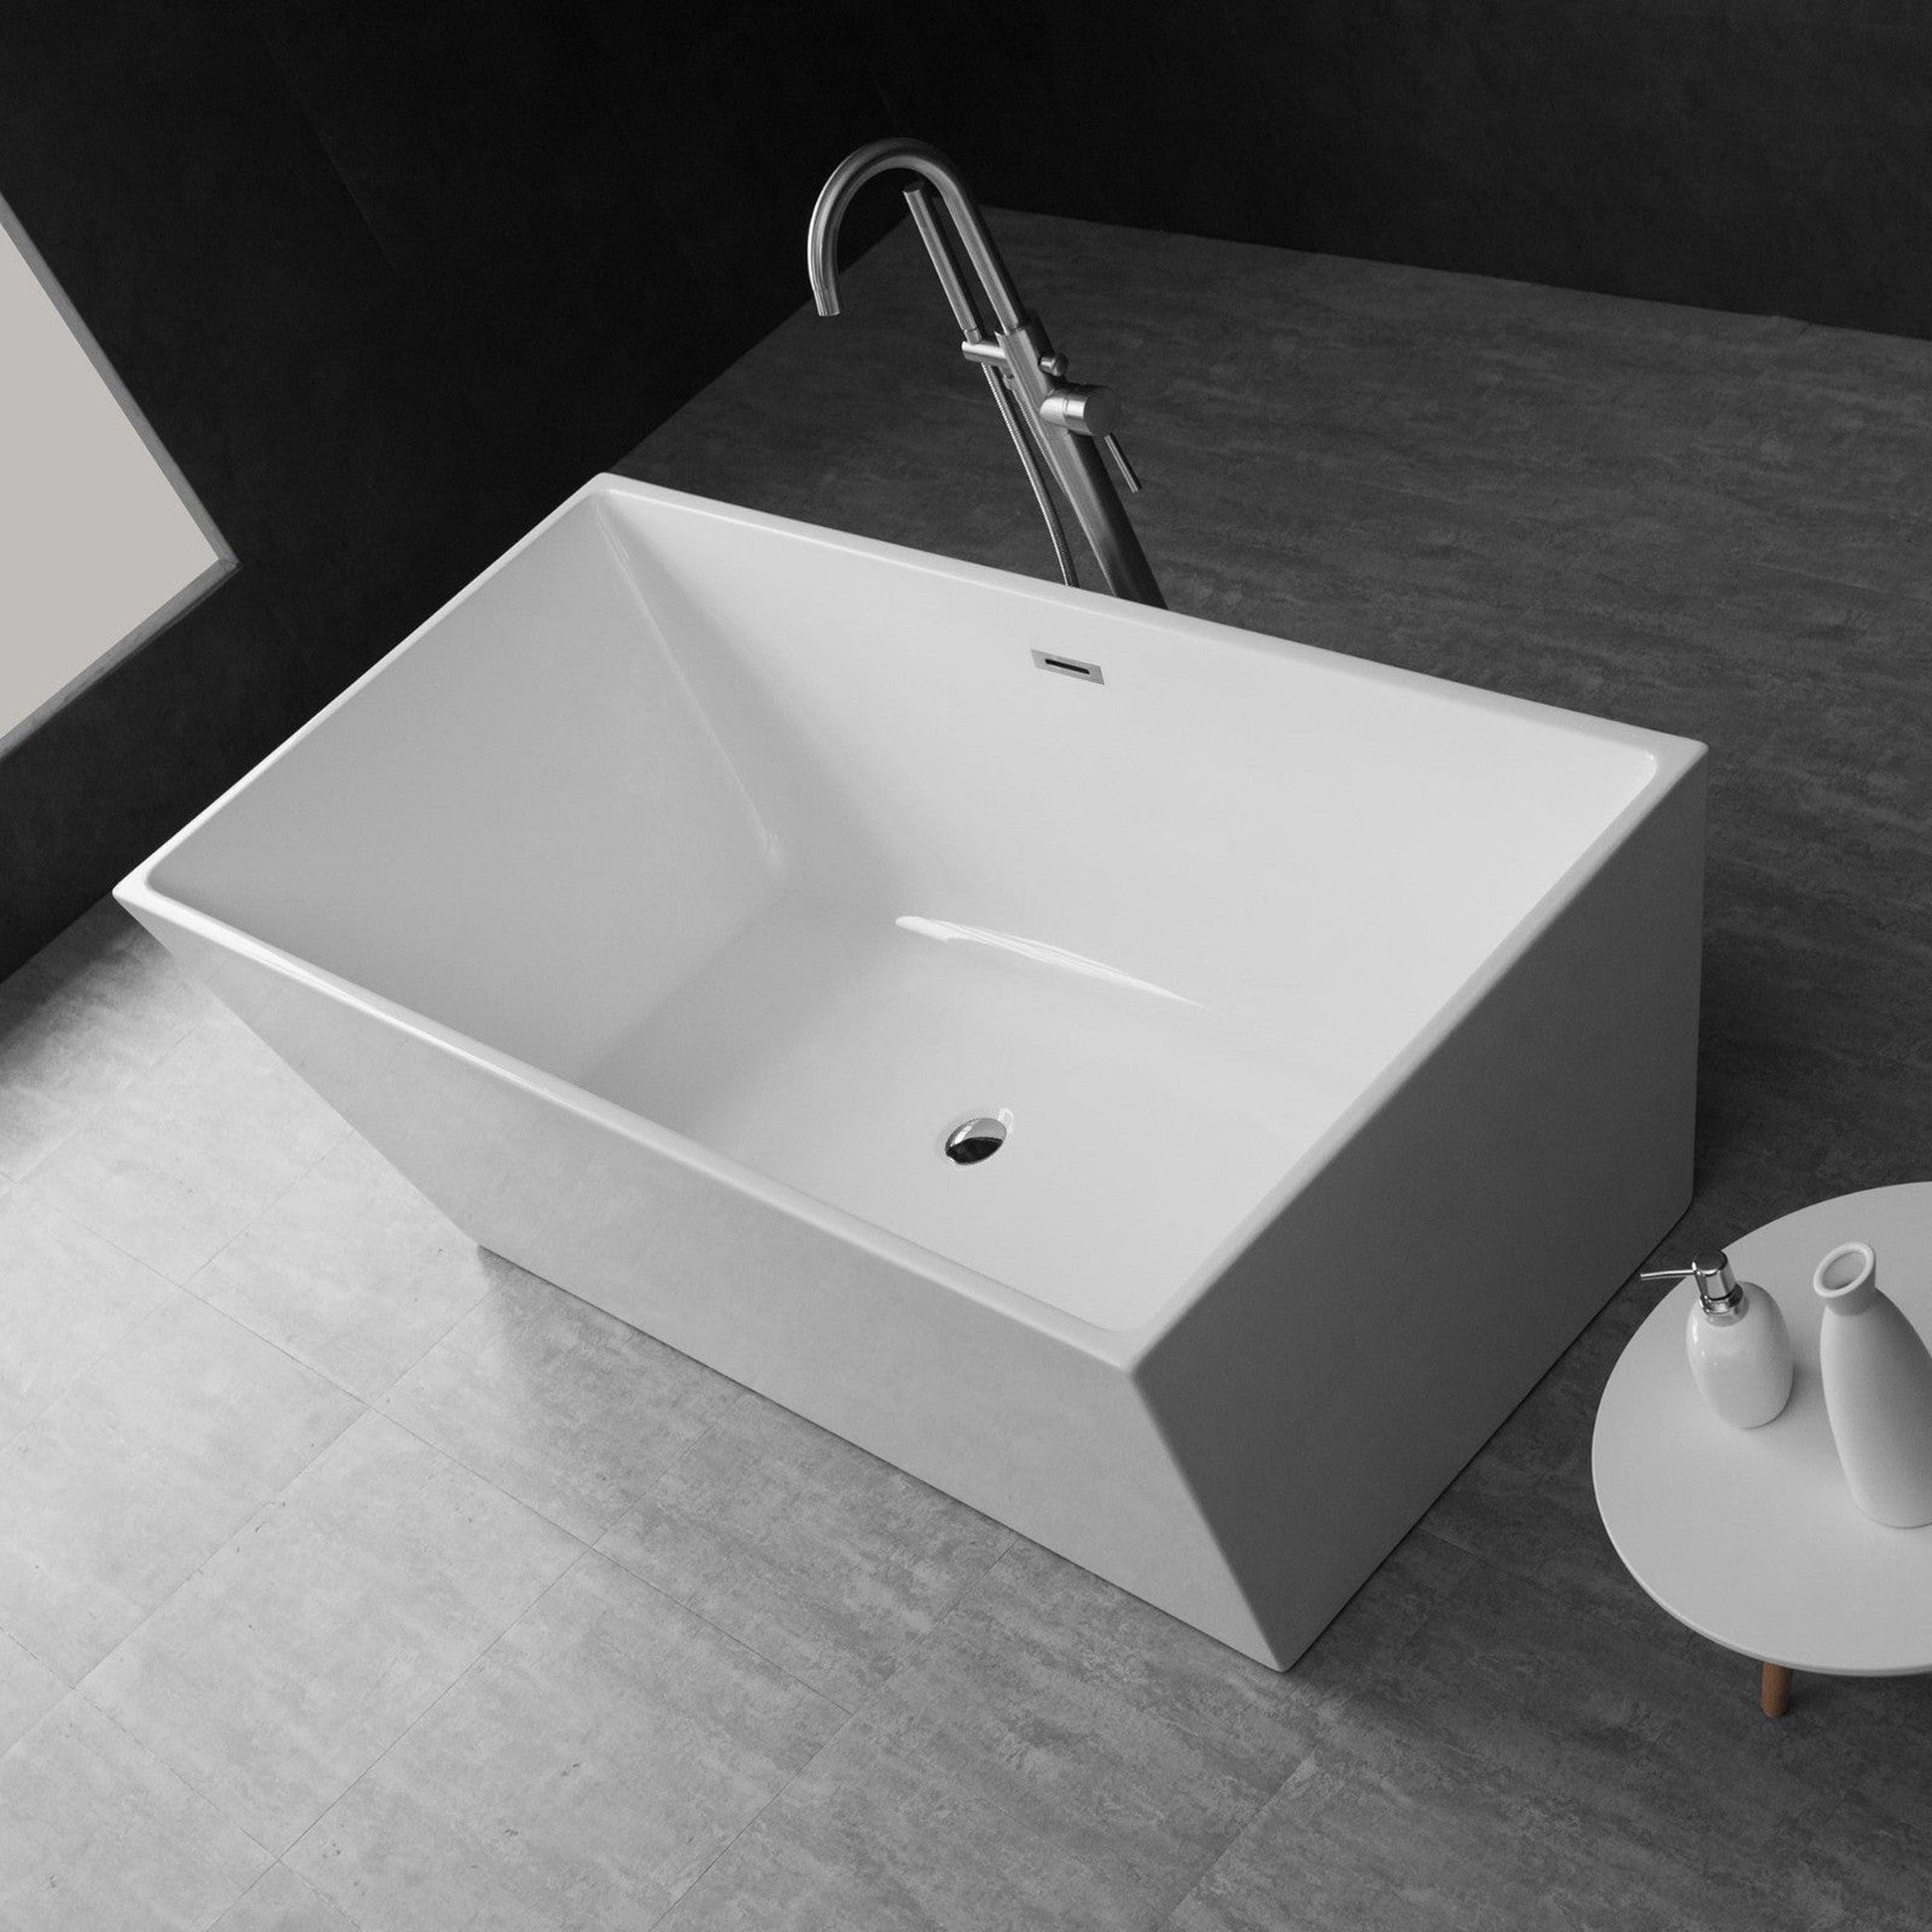 WoodBridge B1412 59" White Acrylic Freestanding Soaking Bathtub With Chrome Drain, Overflow F0071CHVT Tub Filler and Caddy Tray